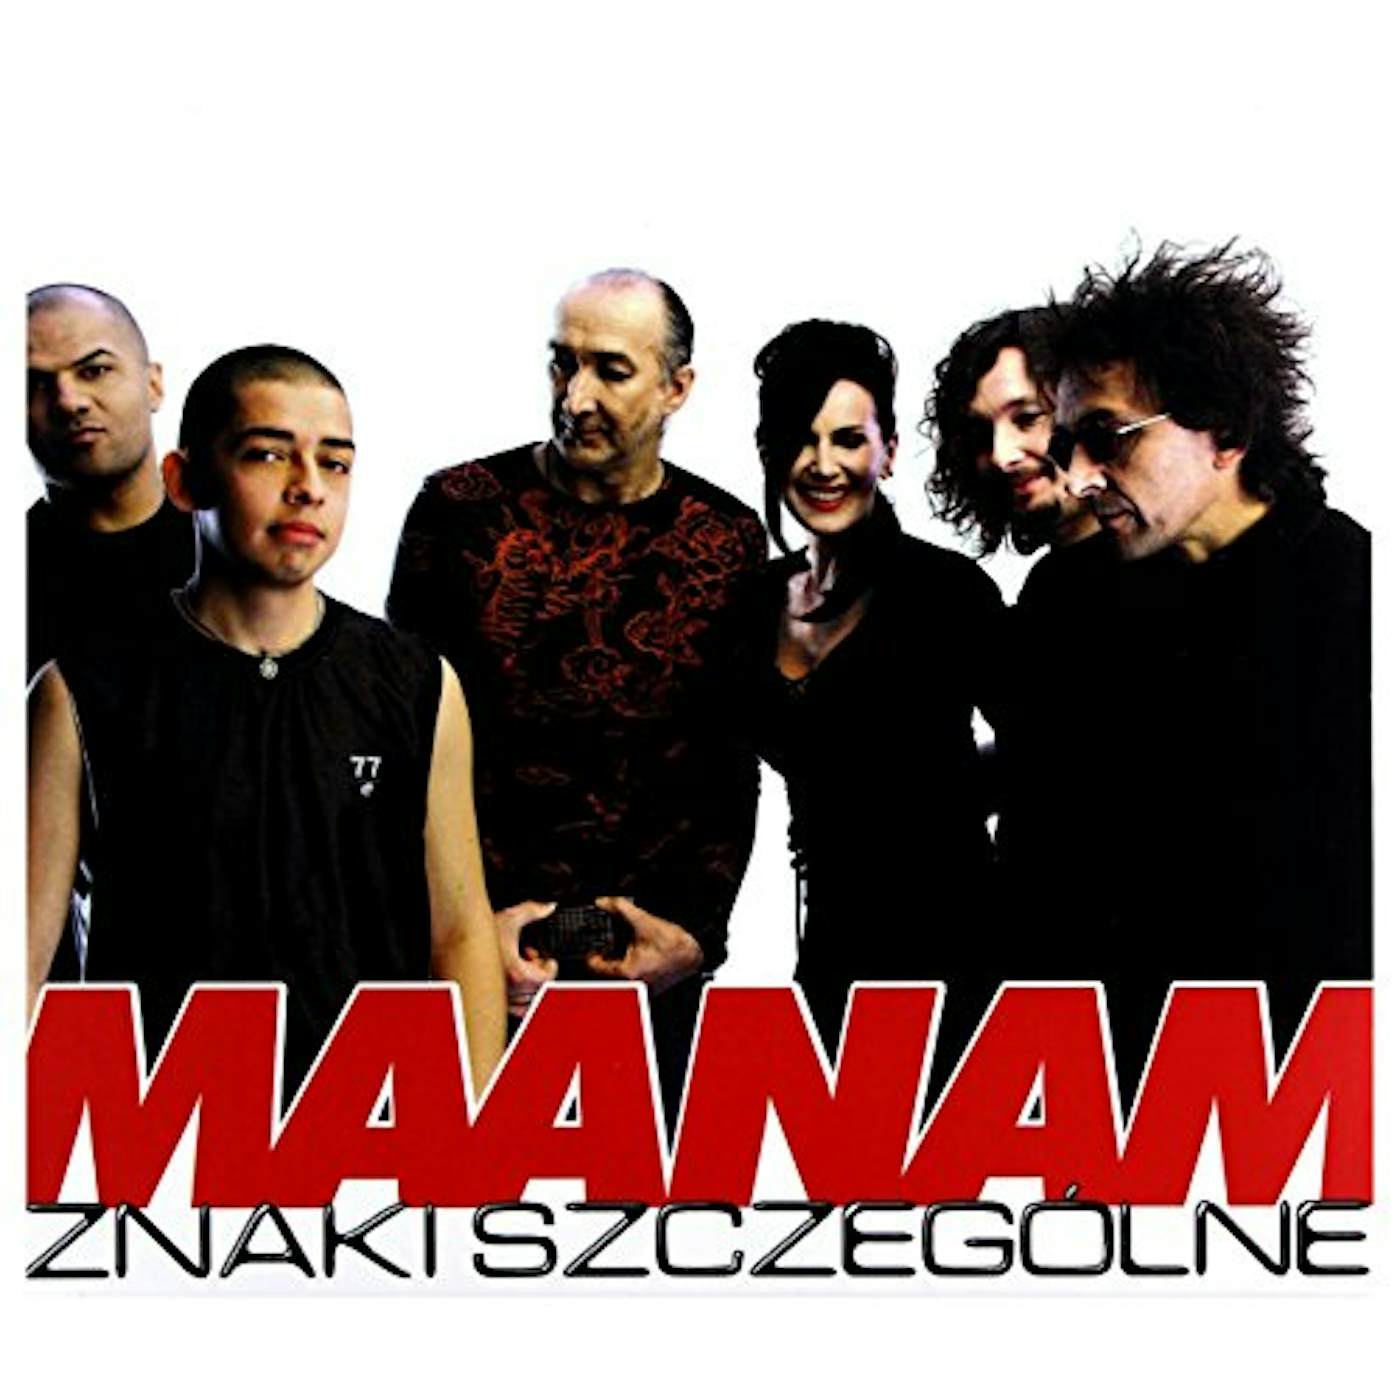 Maanam ZNAKI SZCZEGOLNE Vinyl Record